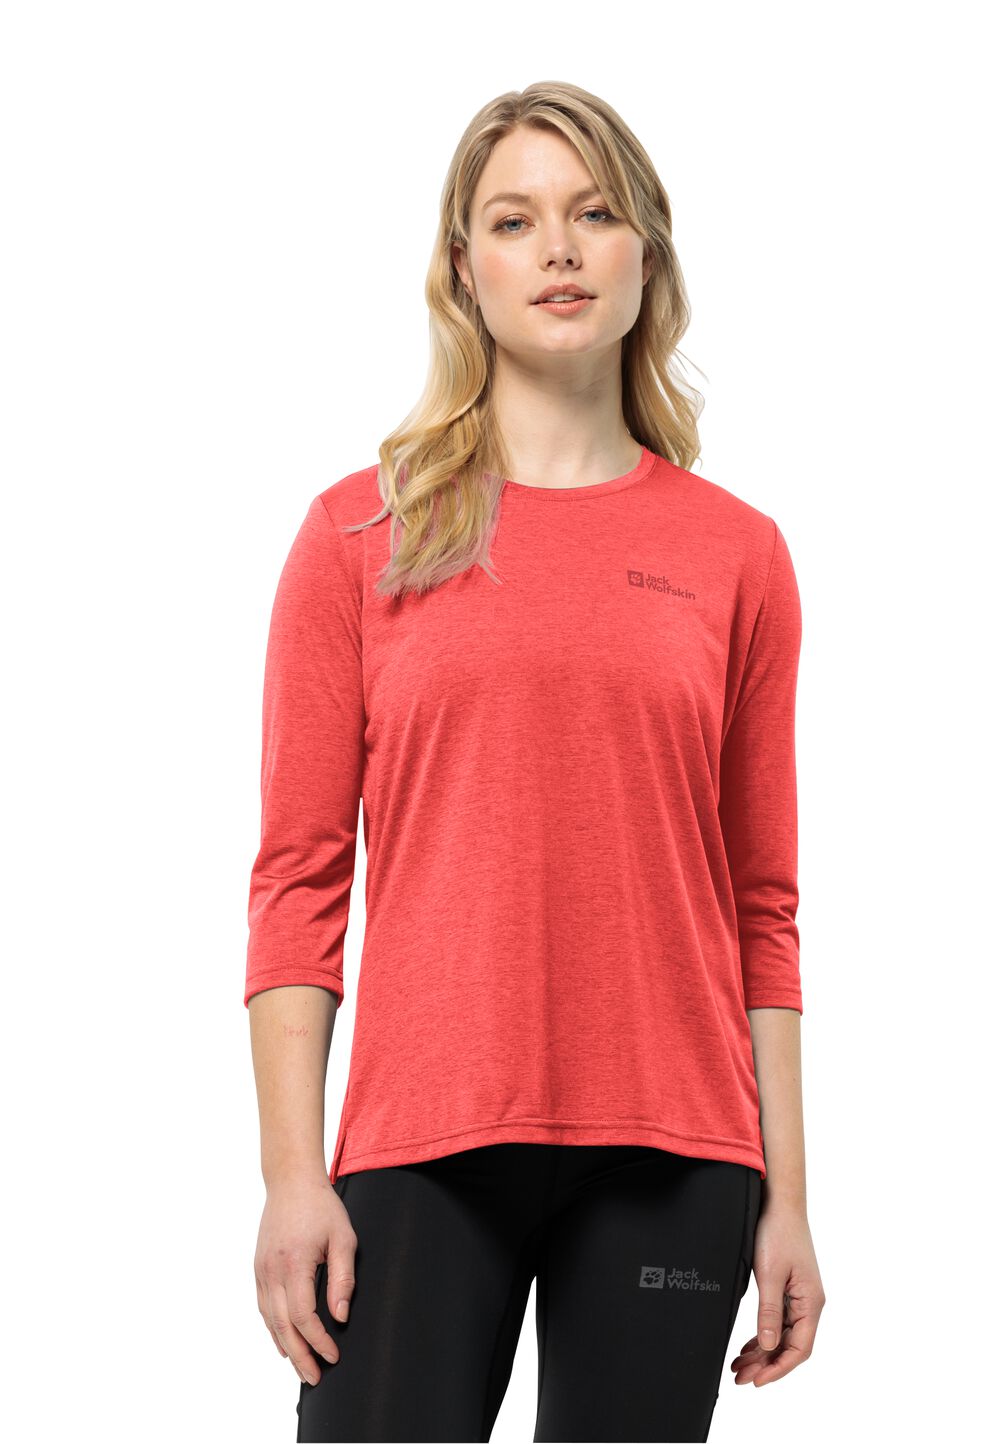 Jack Wolfskin Crosstrail 3 4 T-Shirt Women Functioneel shirt Dames S rood vibrant red